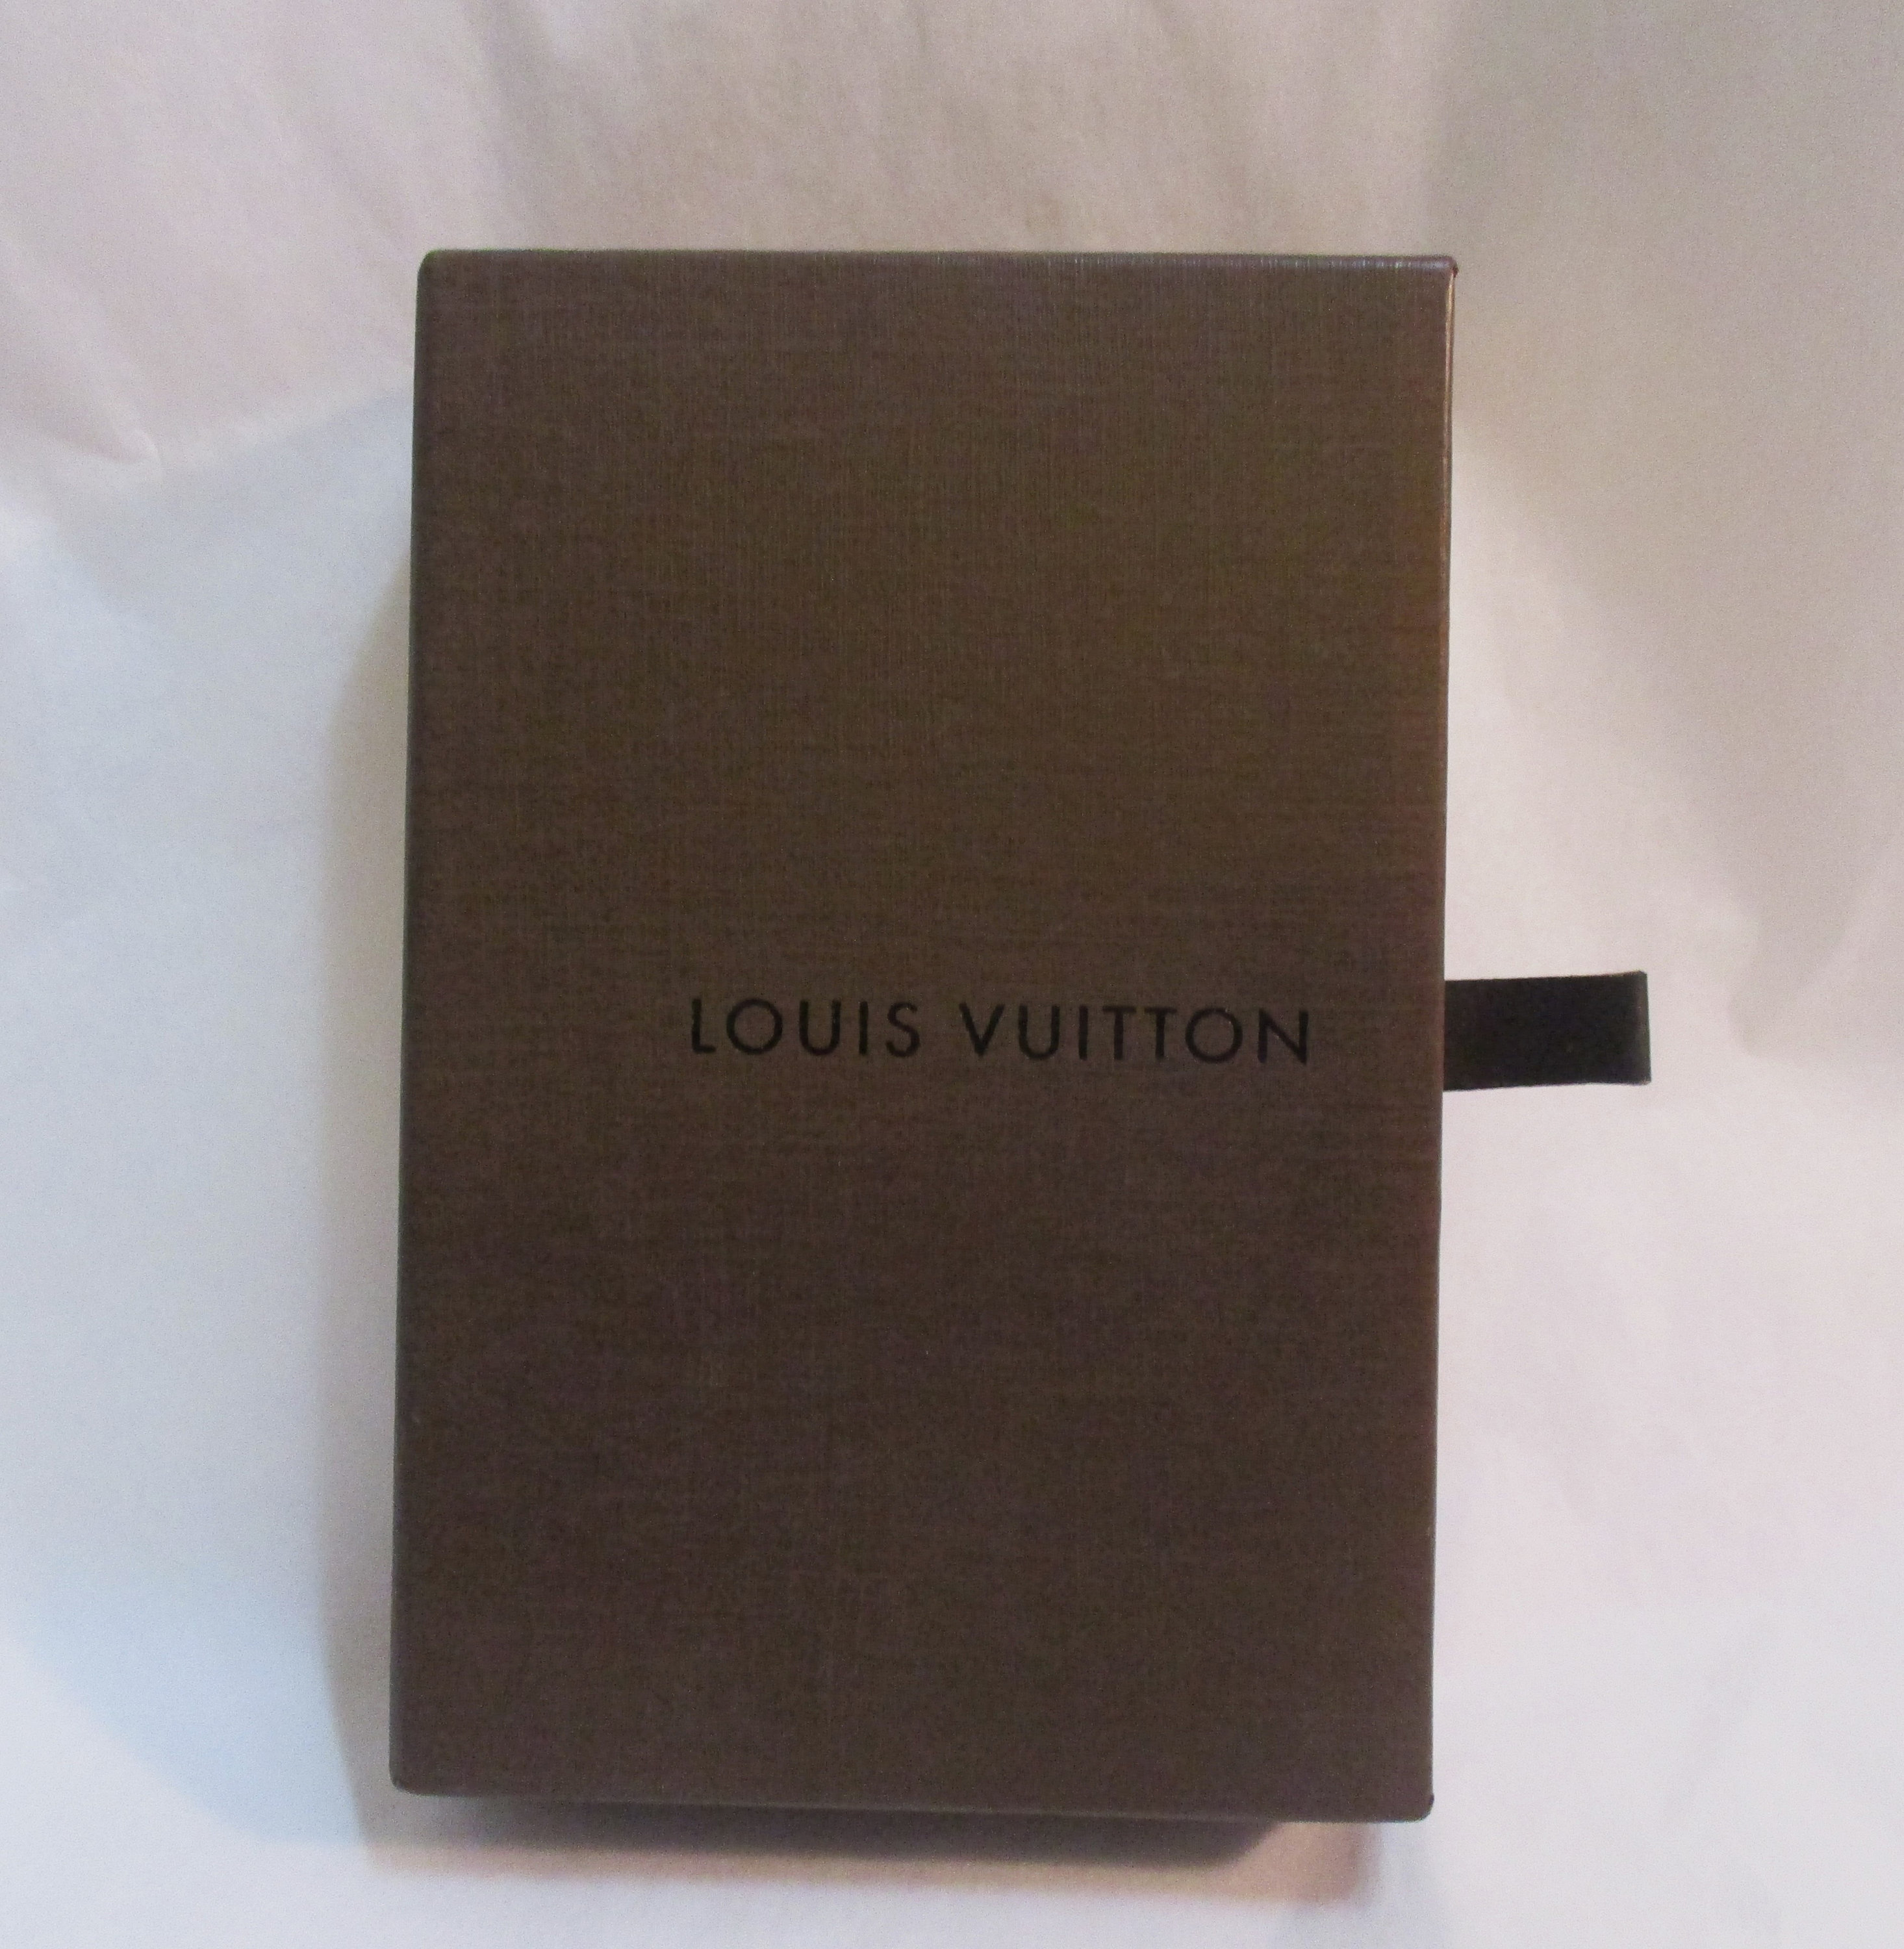 Vintage Louis Vuitton Gift Box Envelope & Insert 4x5 Card